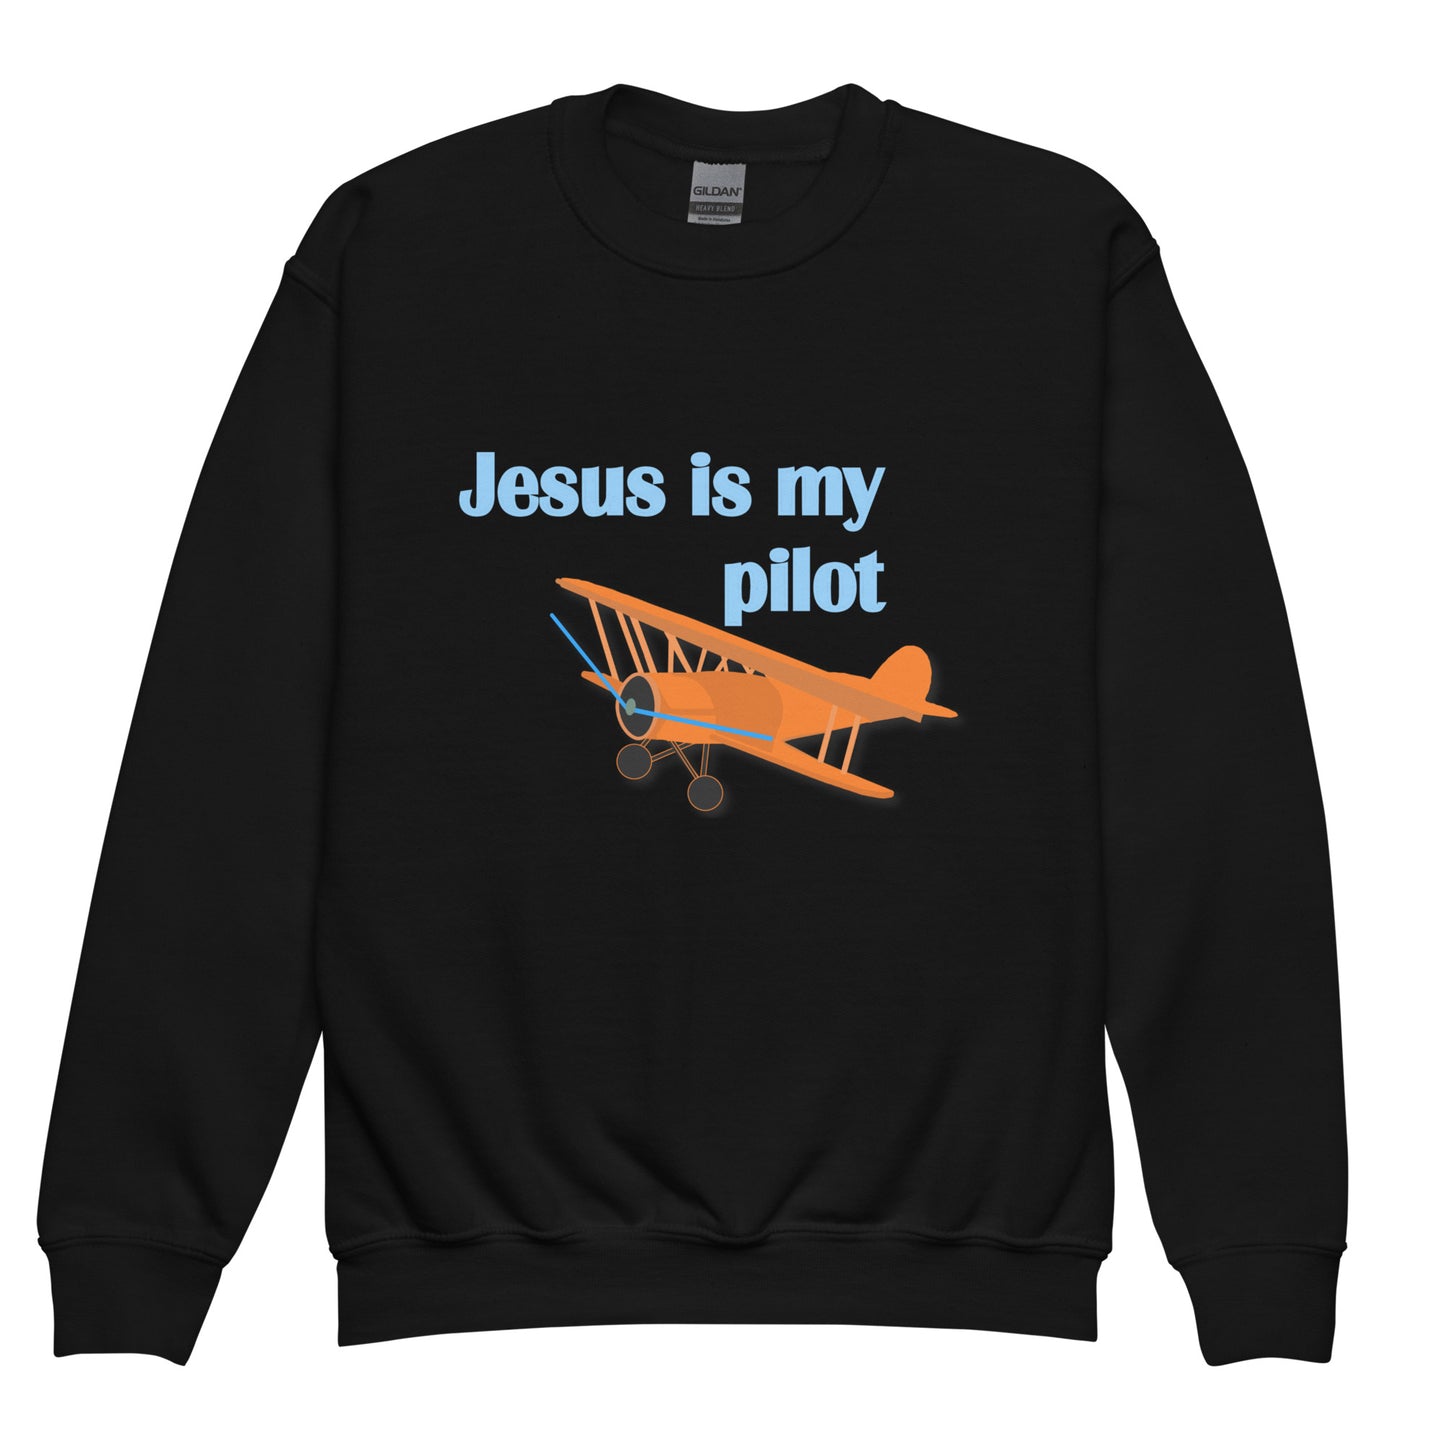 Jesus Is My Pilot (Biplane) Kids Sweatshirt